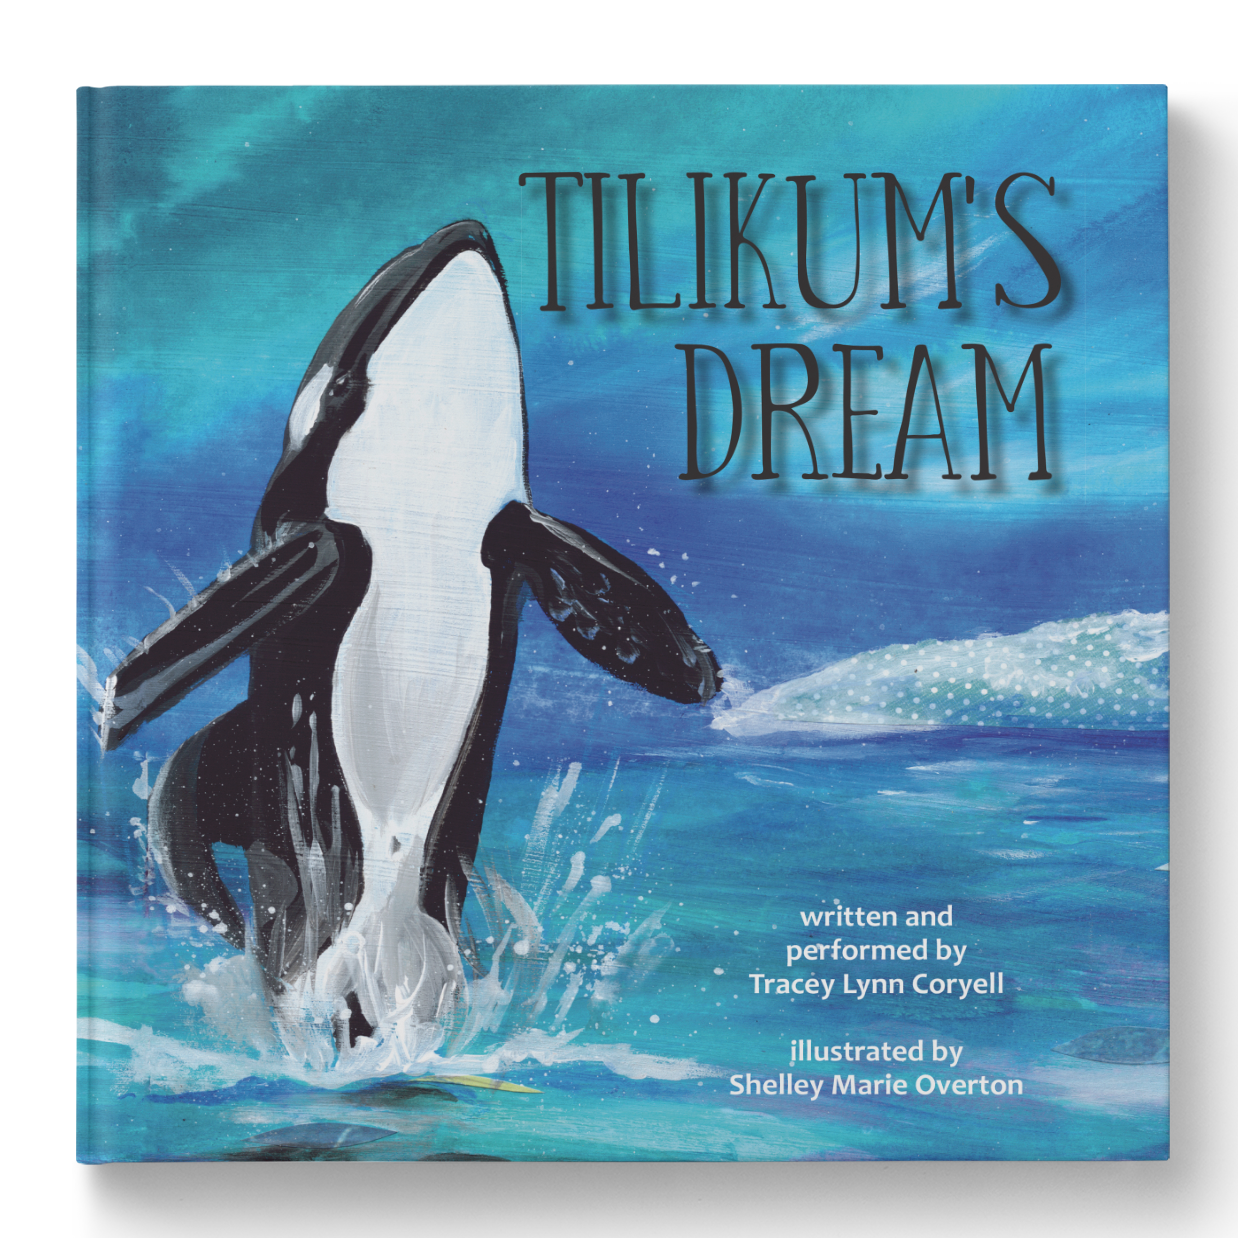 Tilikum's Dream (book and soundtrack)